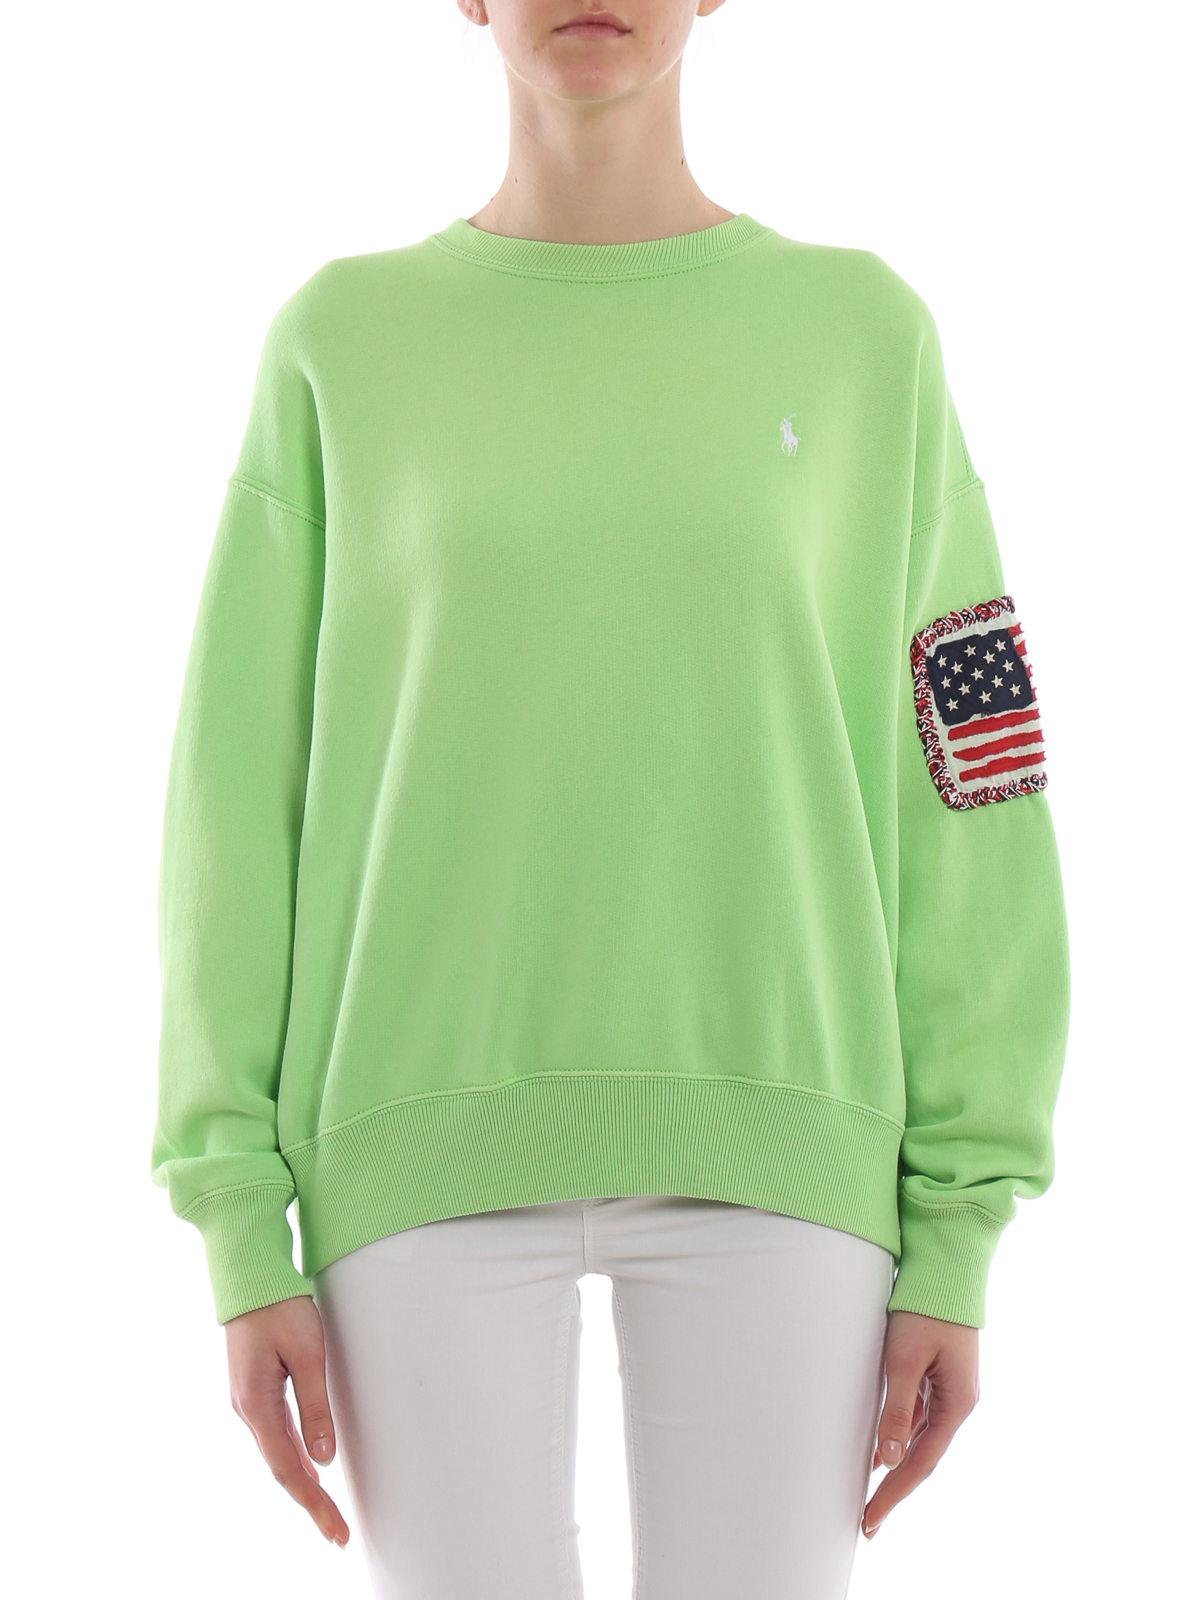 Sweatshirts & Sweaters Polo Ralph Lauren - American flag cotton ...